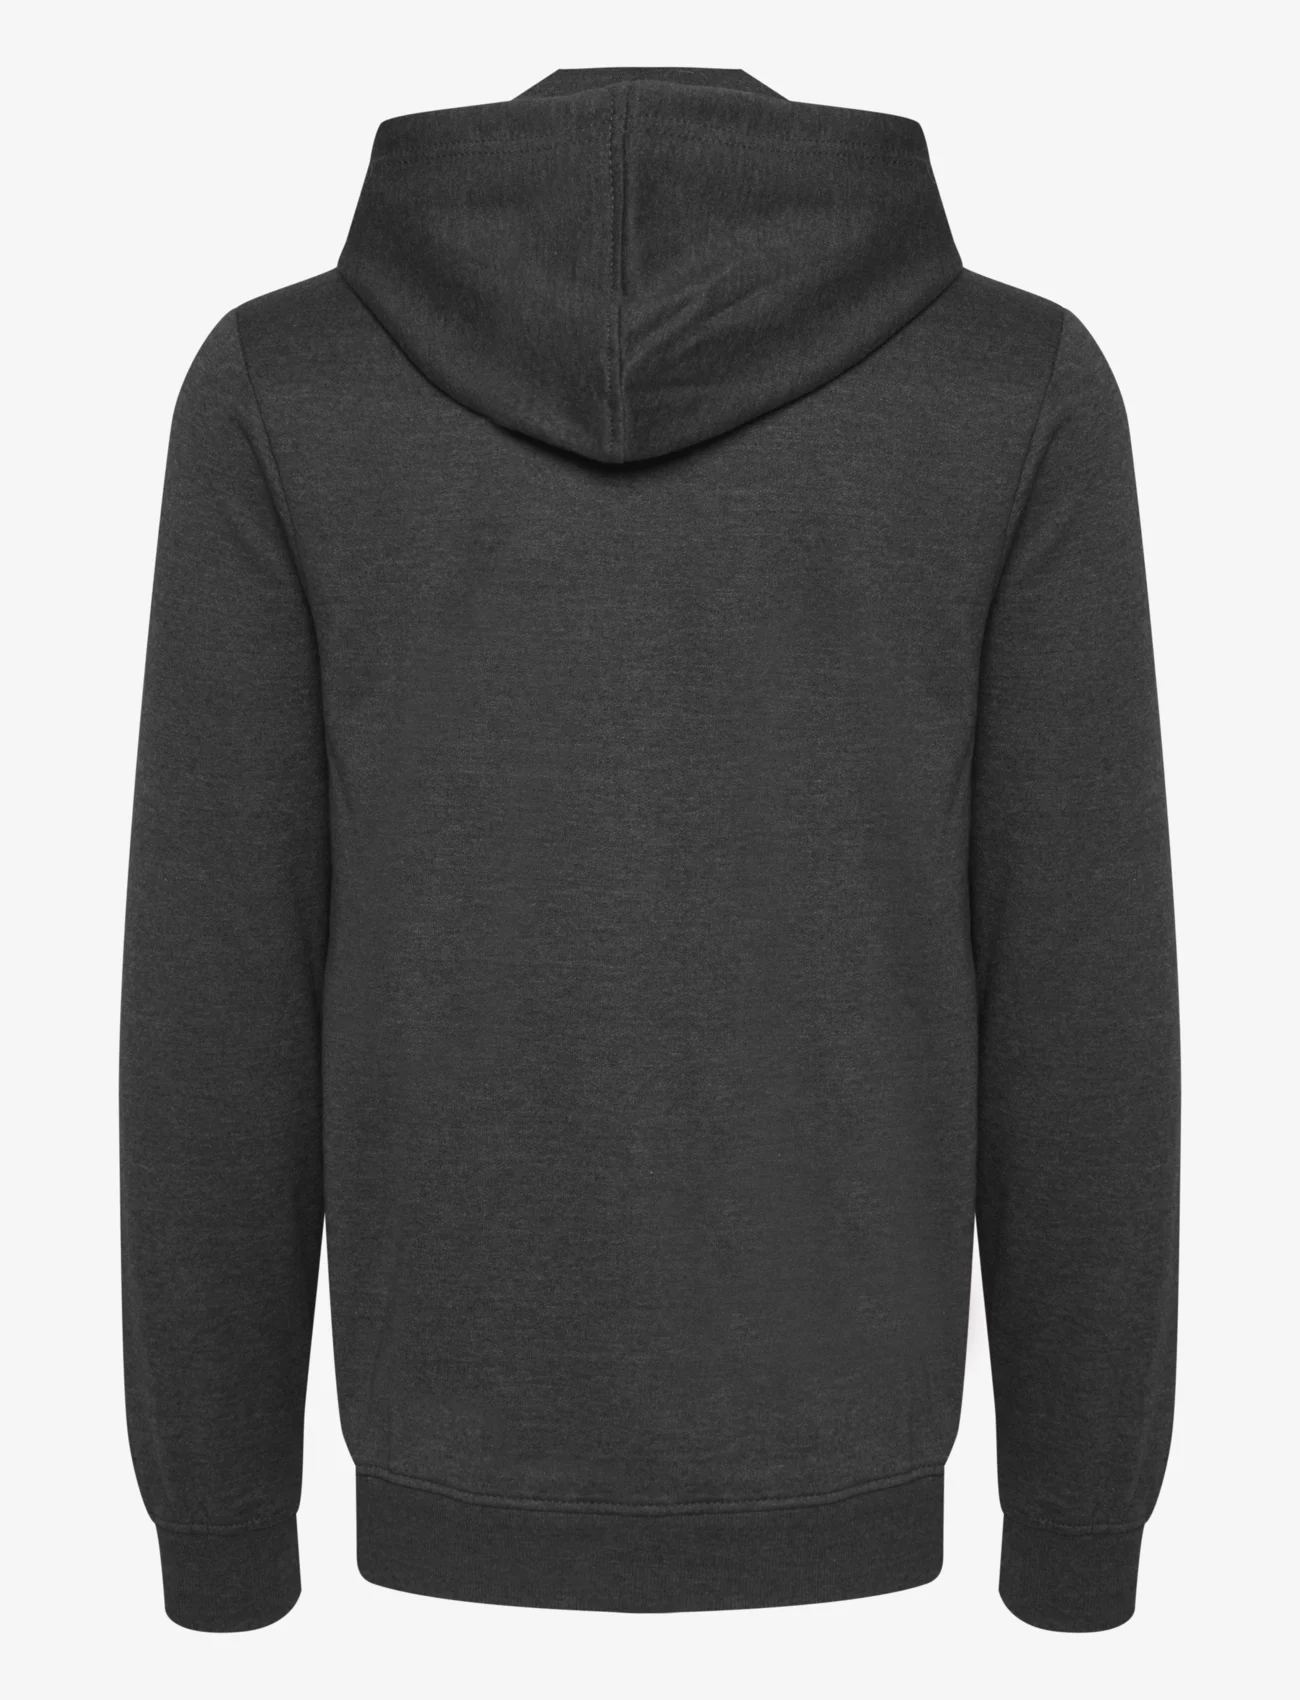 Blend - BHNOAH sweatshirt - lägsta priserna - charcoal - 1